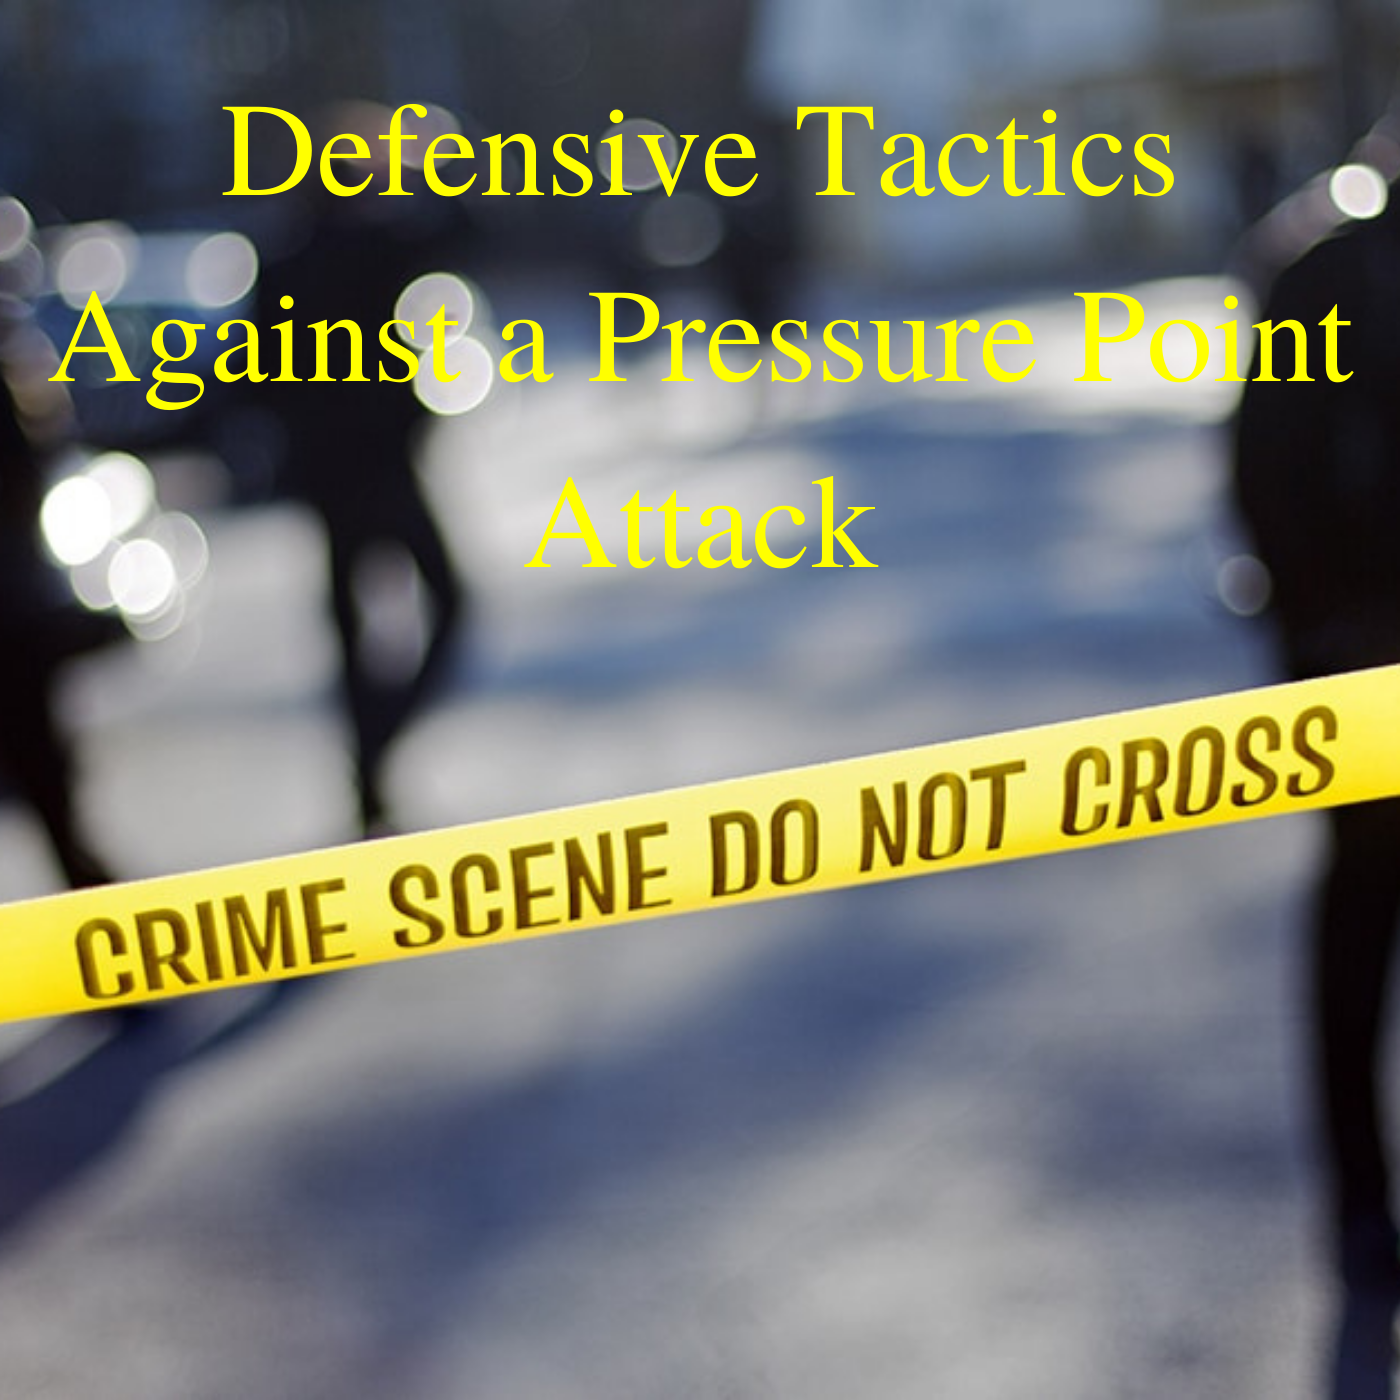 Defensive Tactics Against a Pressure Point Attack.